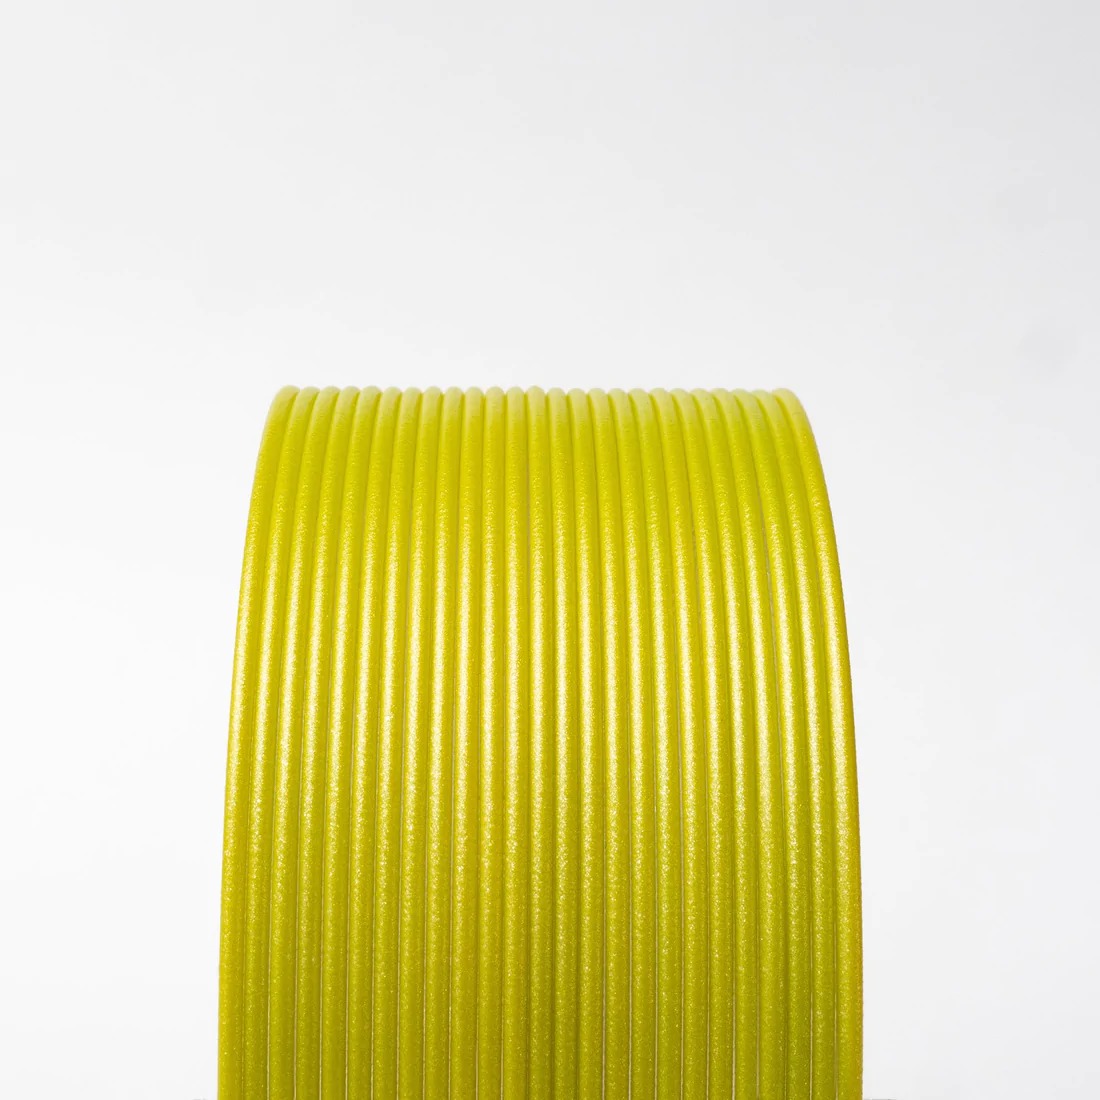 Lulz Metallic Green HTPLA  Proto-pasta 2.85mm 500gms 3D printing filament